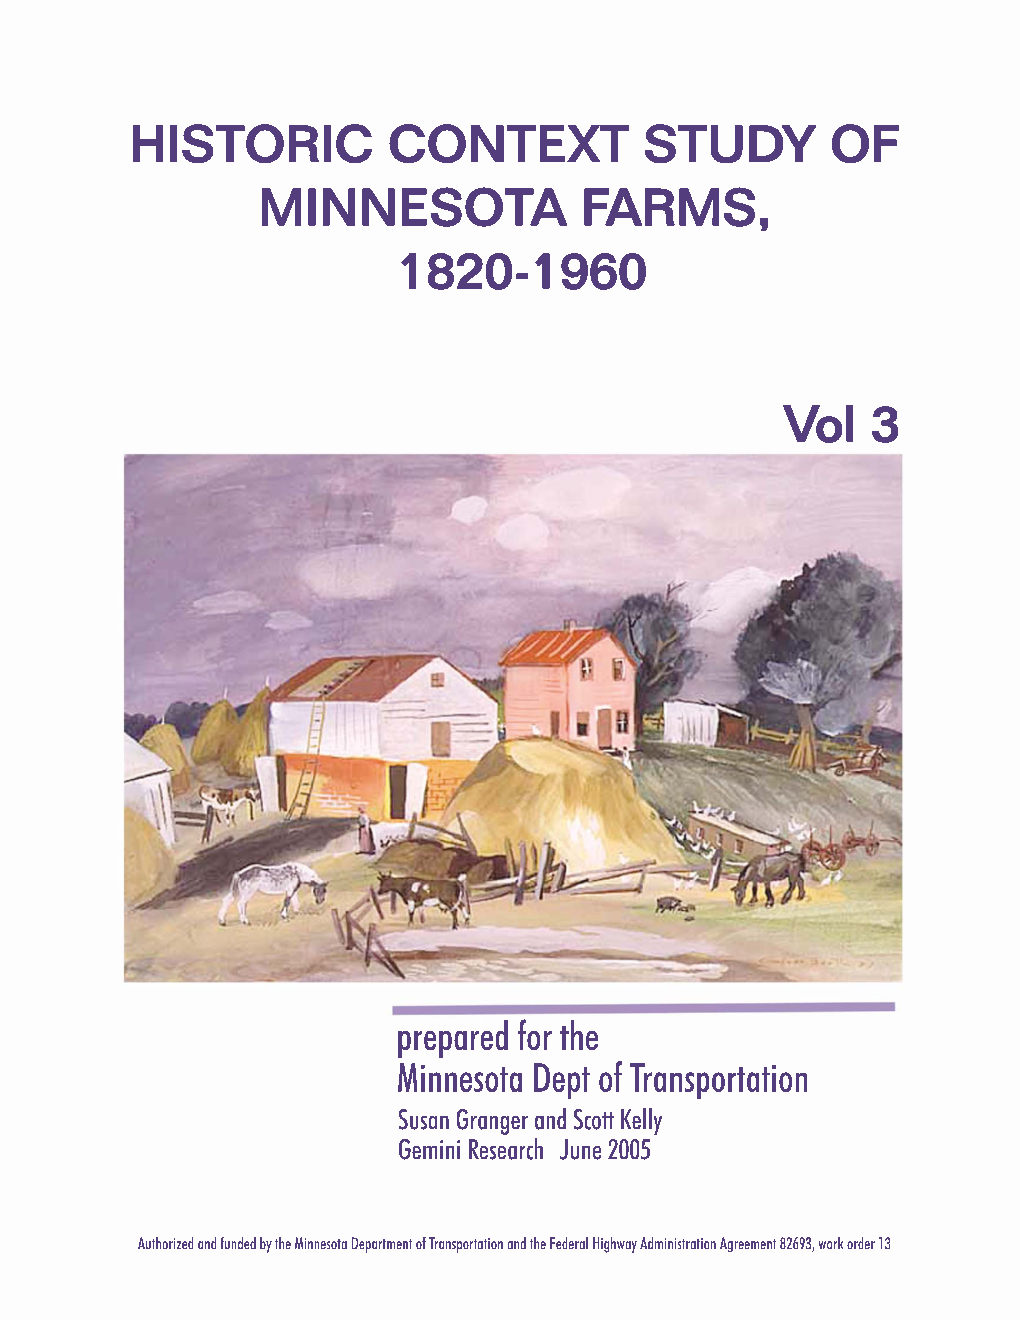 Historic Context Study of Minnesota Farms, 1820-1960: Vol 3